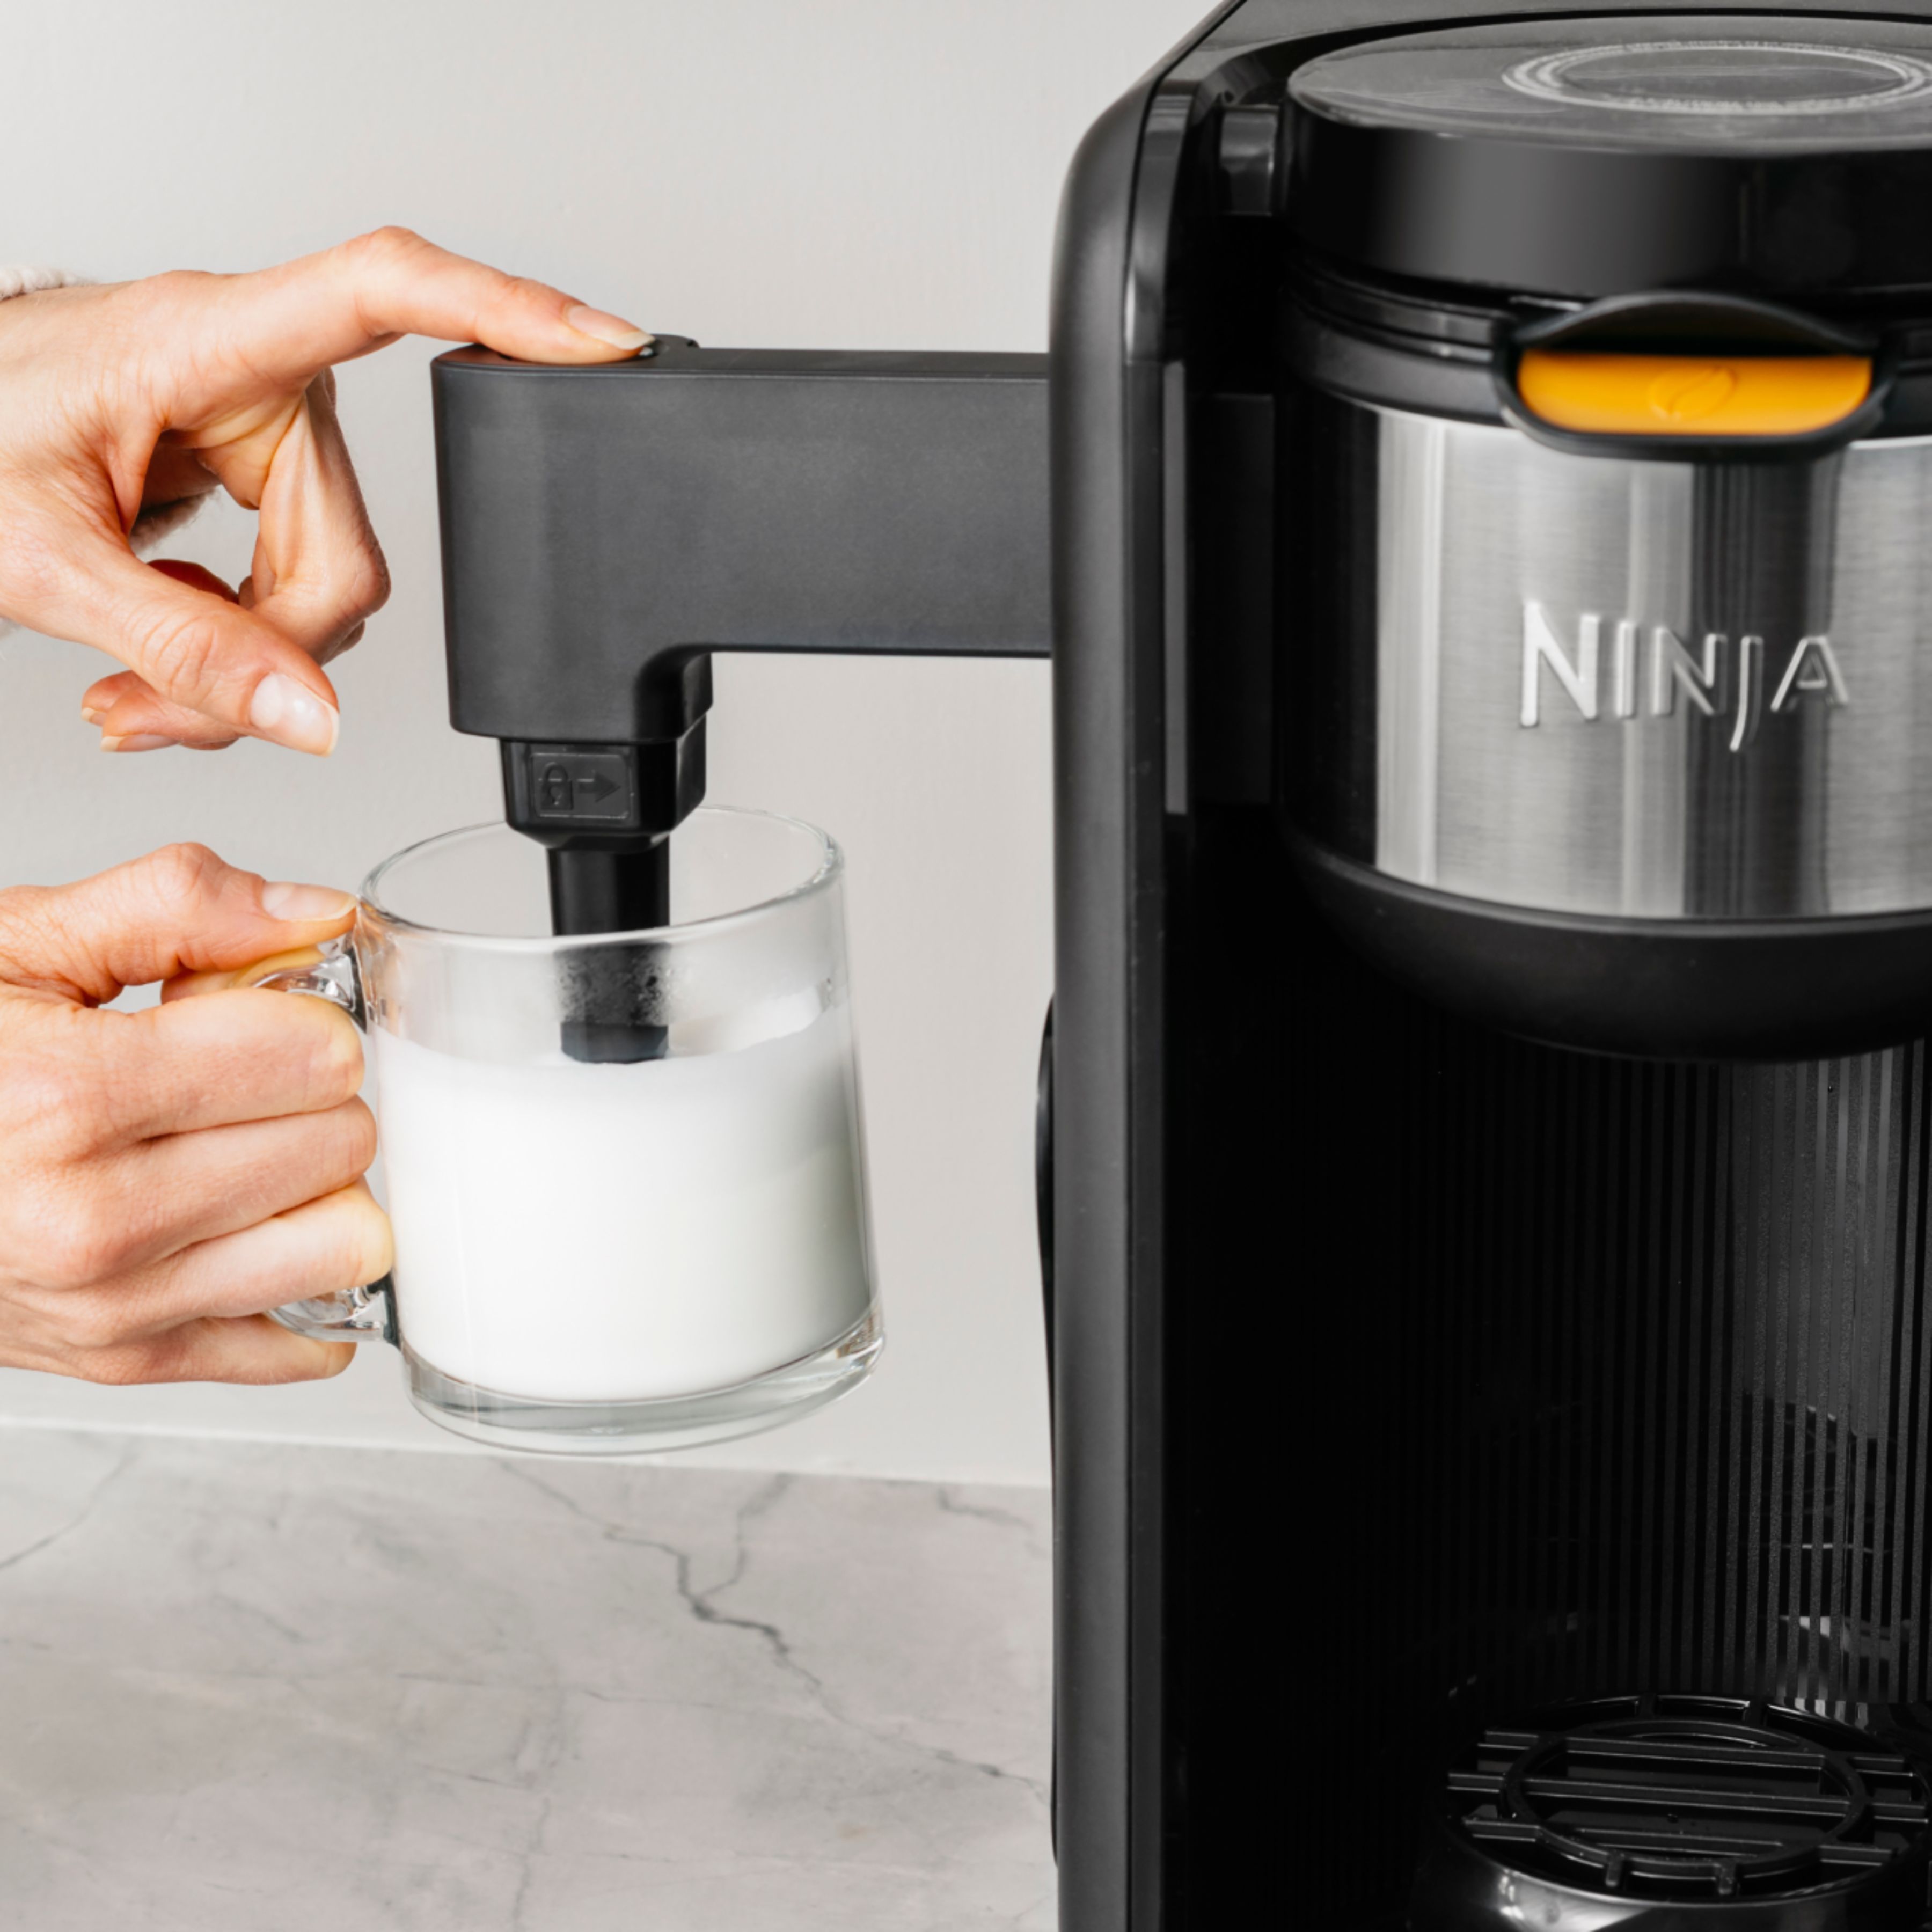 Woot has a Ninja coffee maker on sale